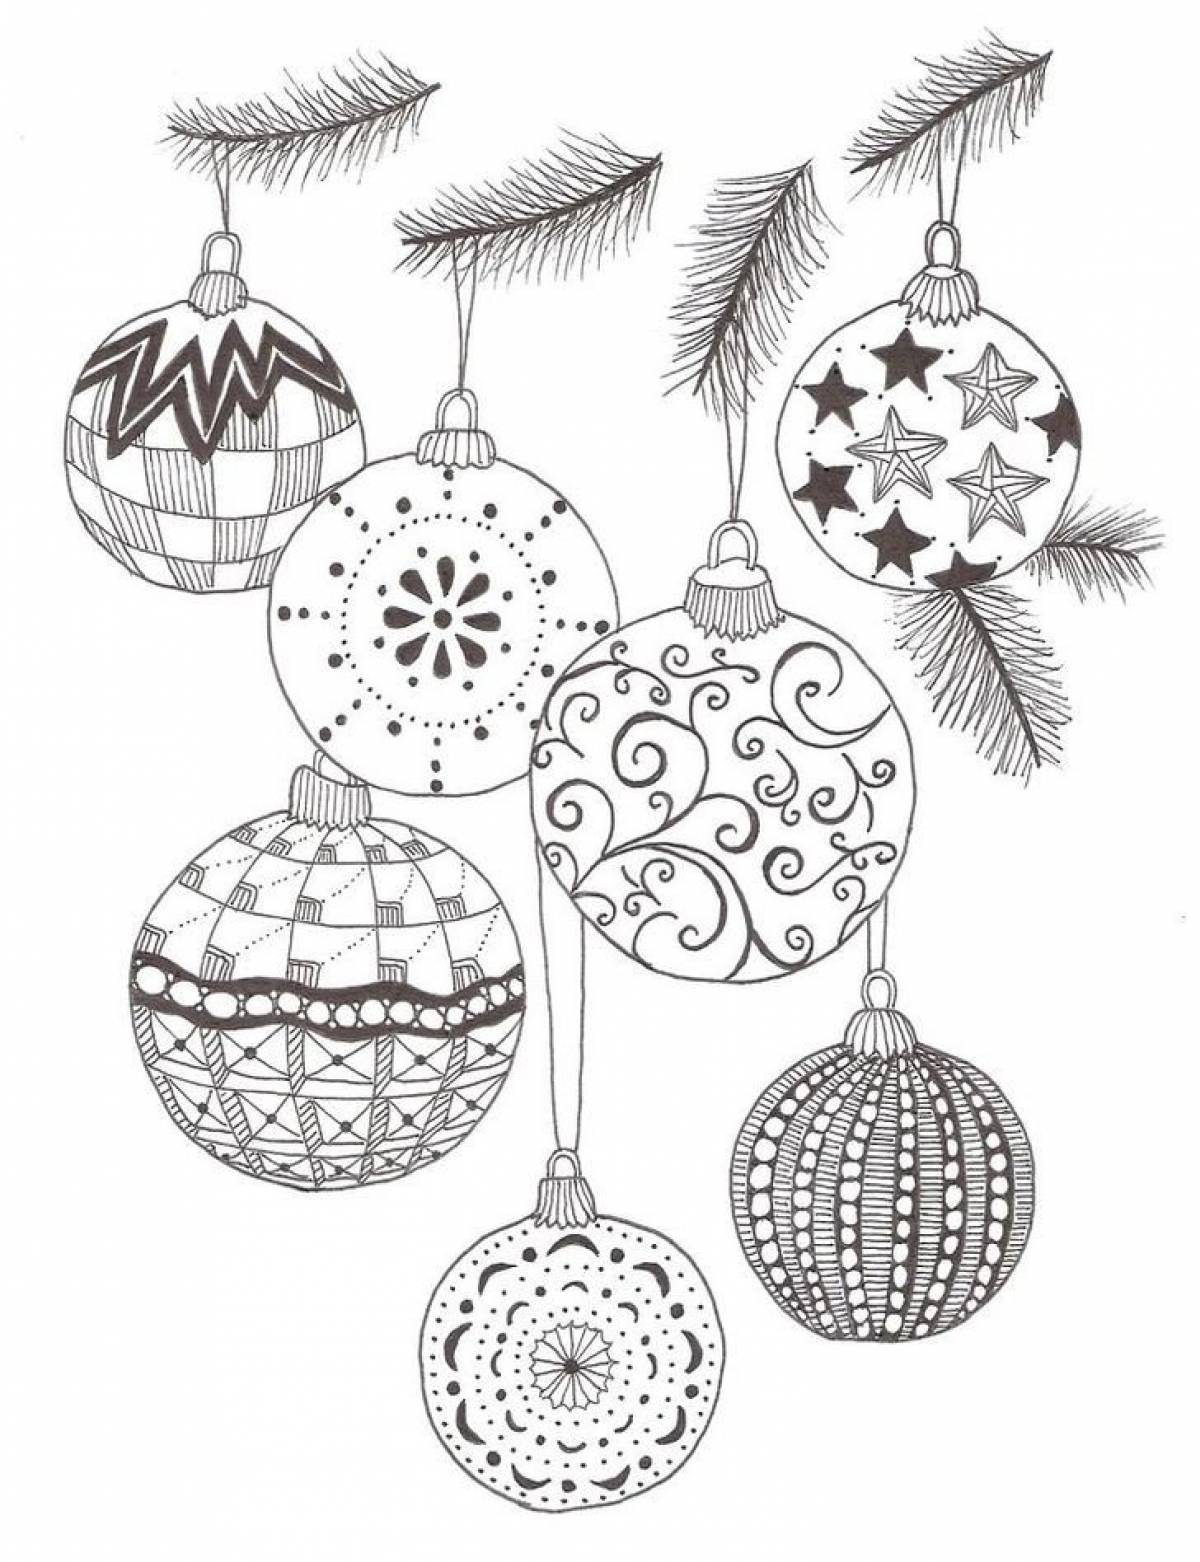 Antistress balls on the Christmas tree